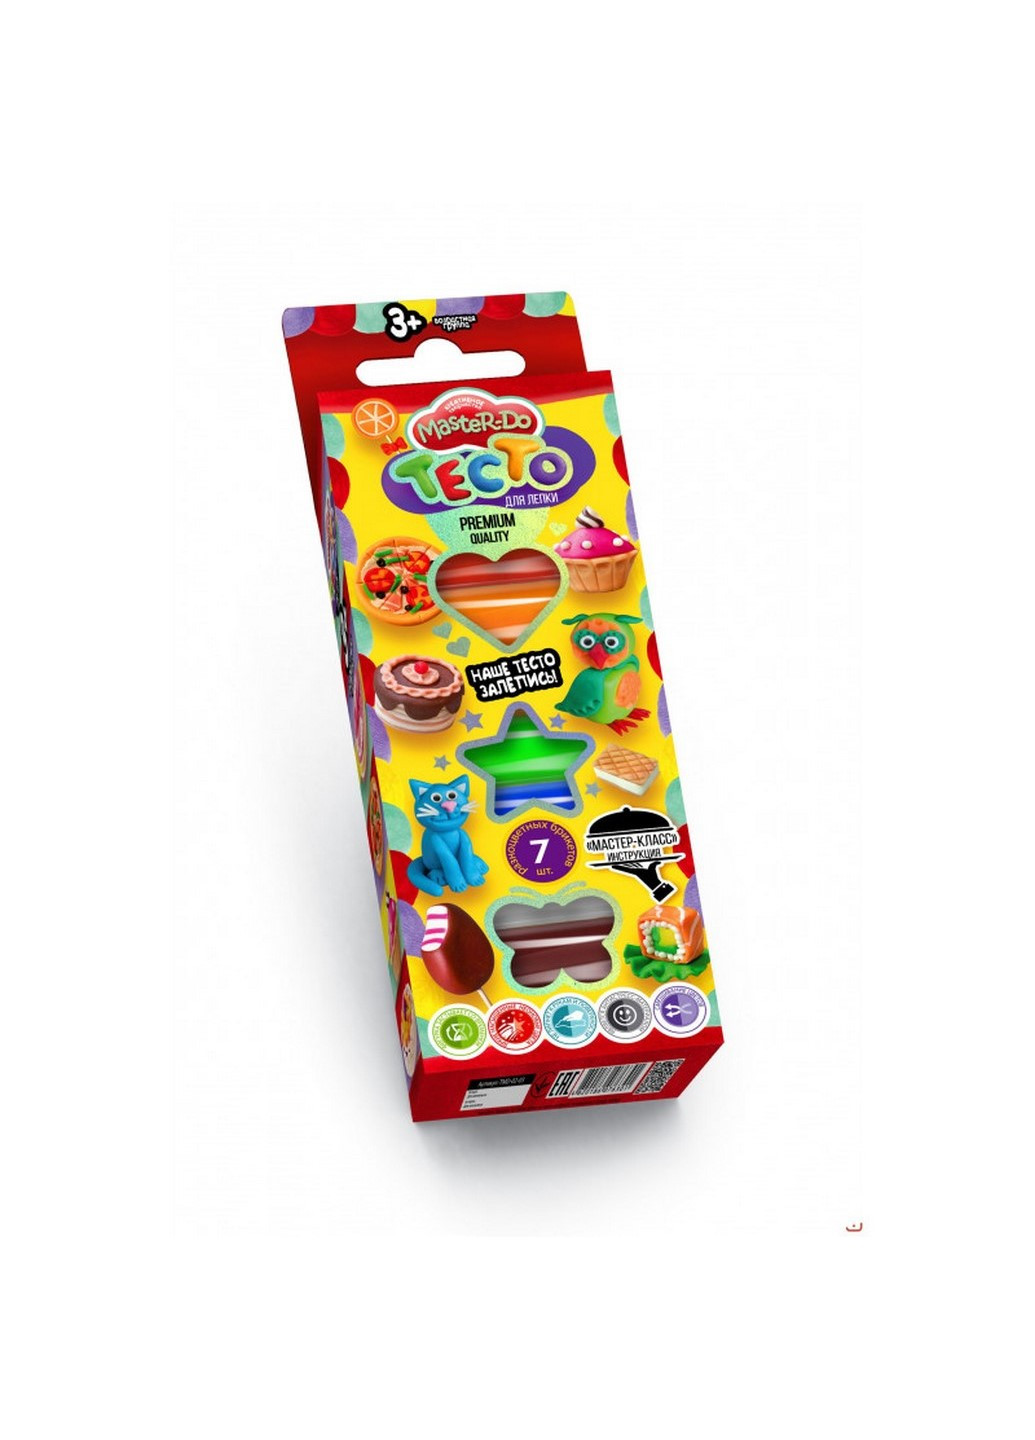 Комплект креативного творчества "Тесто для лепки "Master Do" 7 цветов планшет укр. 7541DT Danko Toys (227046805)